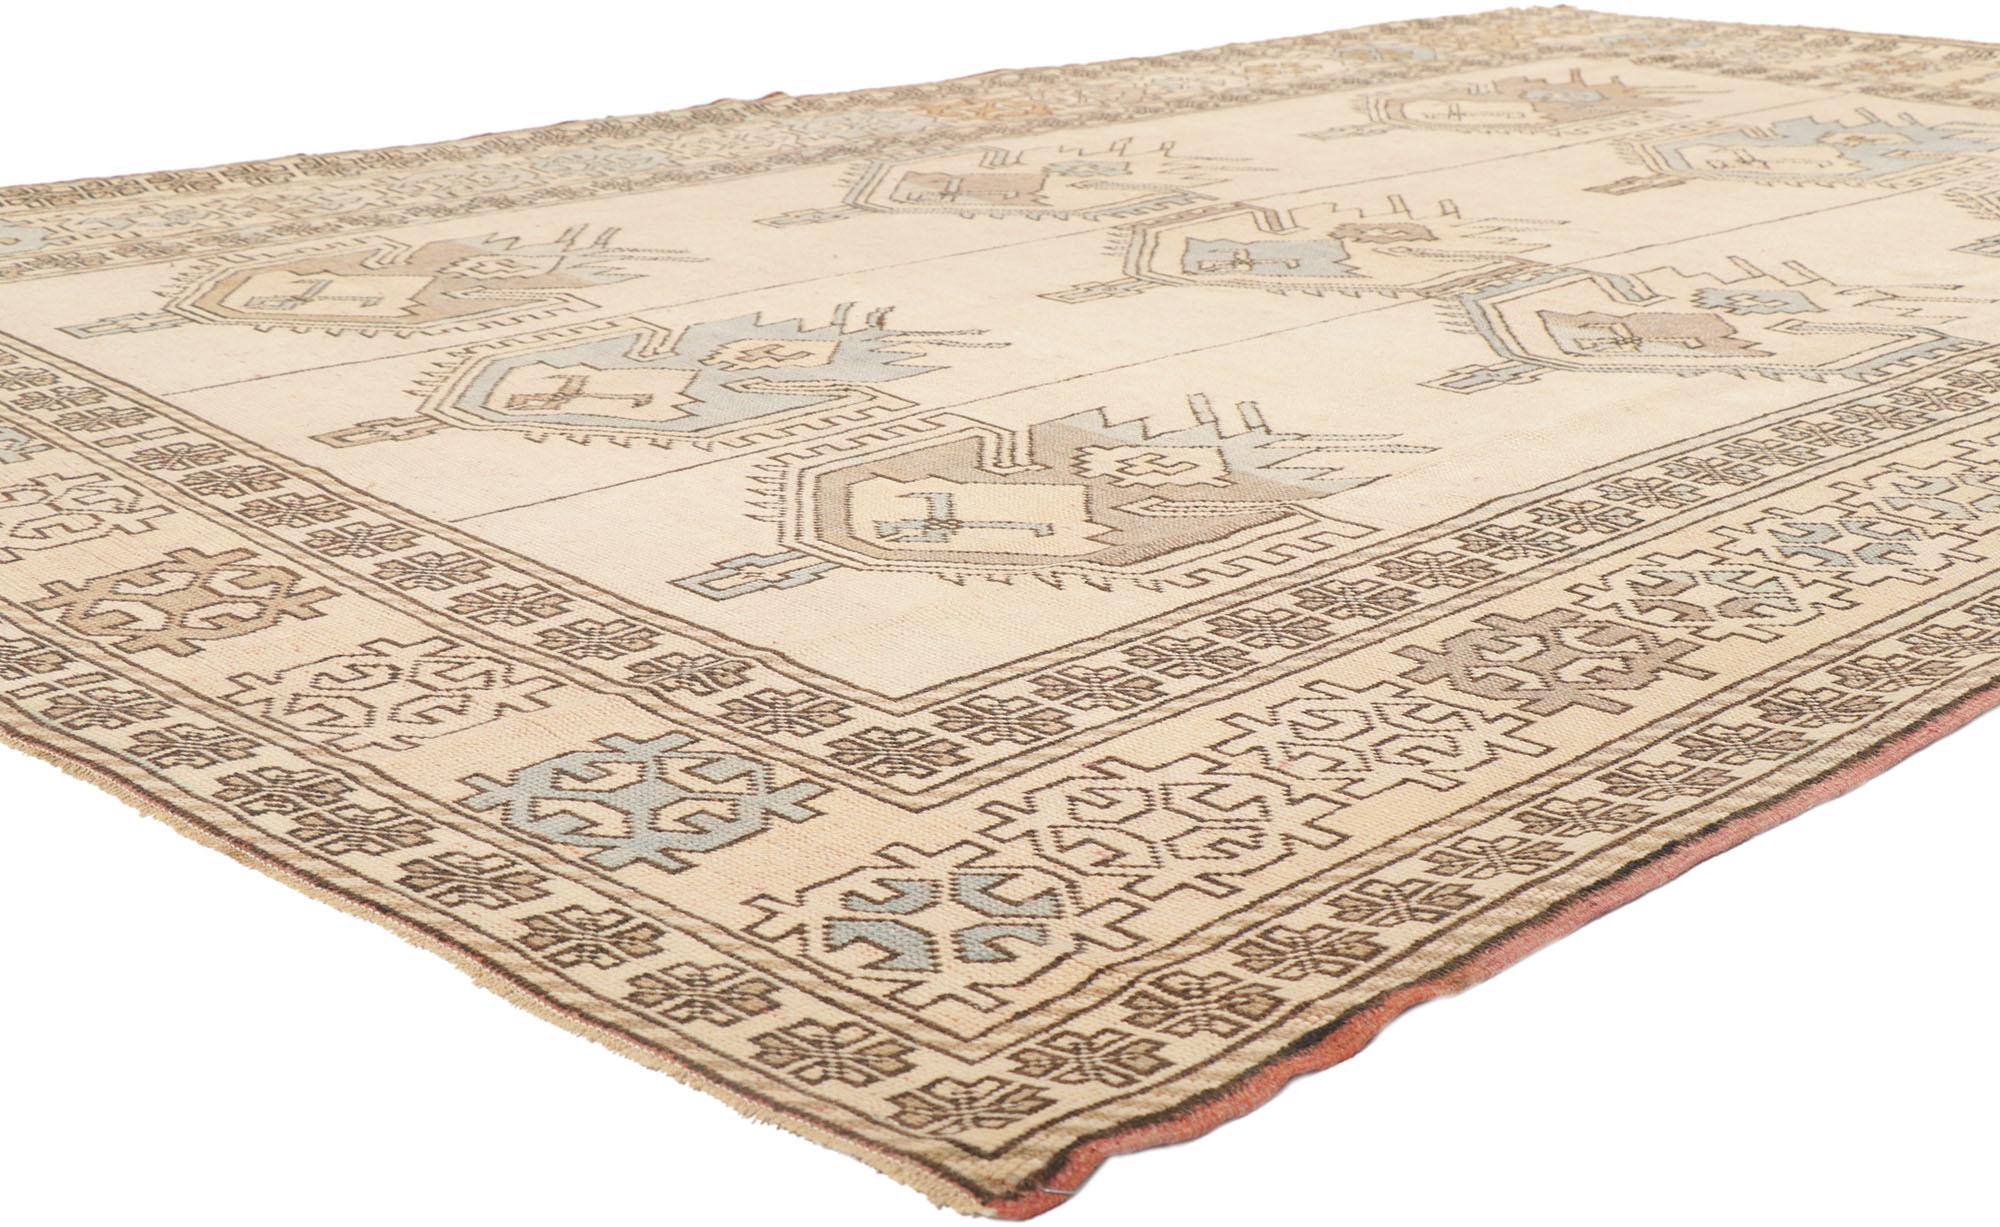 53684 Vintage Turkish Oushak rug, 7'04 x 10'04.
Abrash. Antique wash. Hand-knotted wool. Made in Turkey.